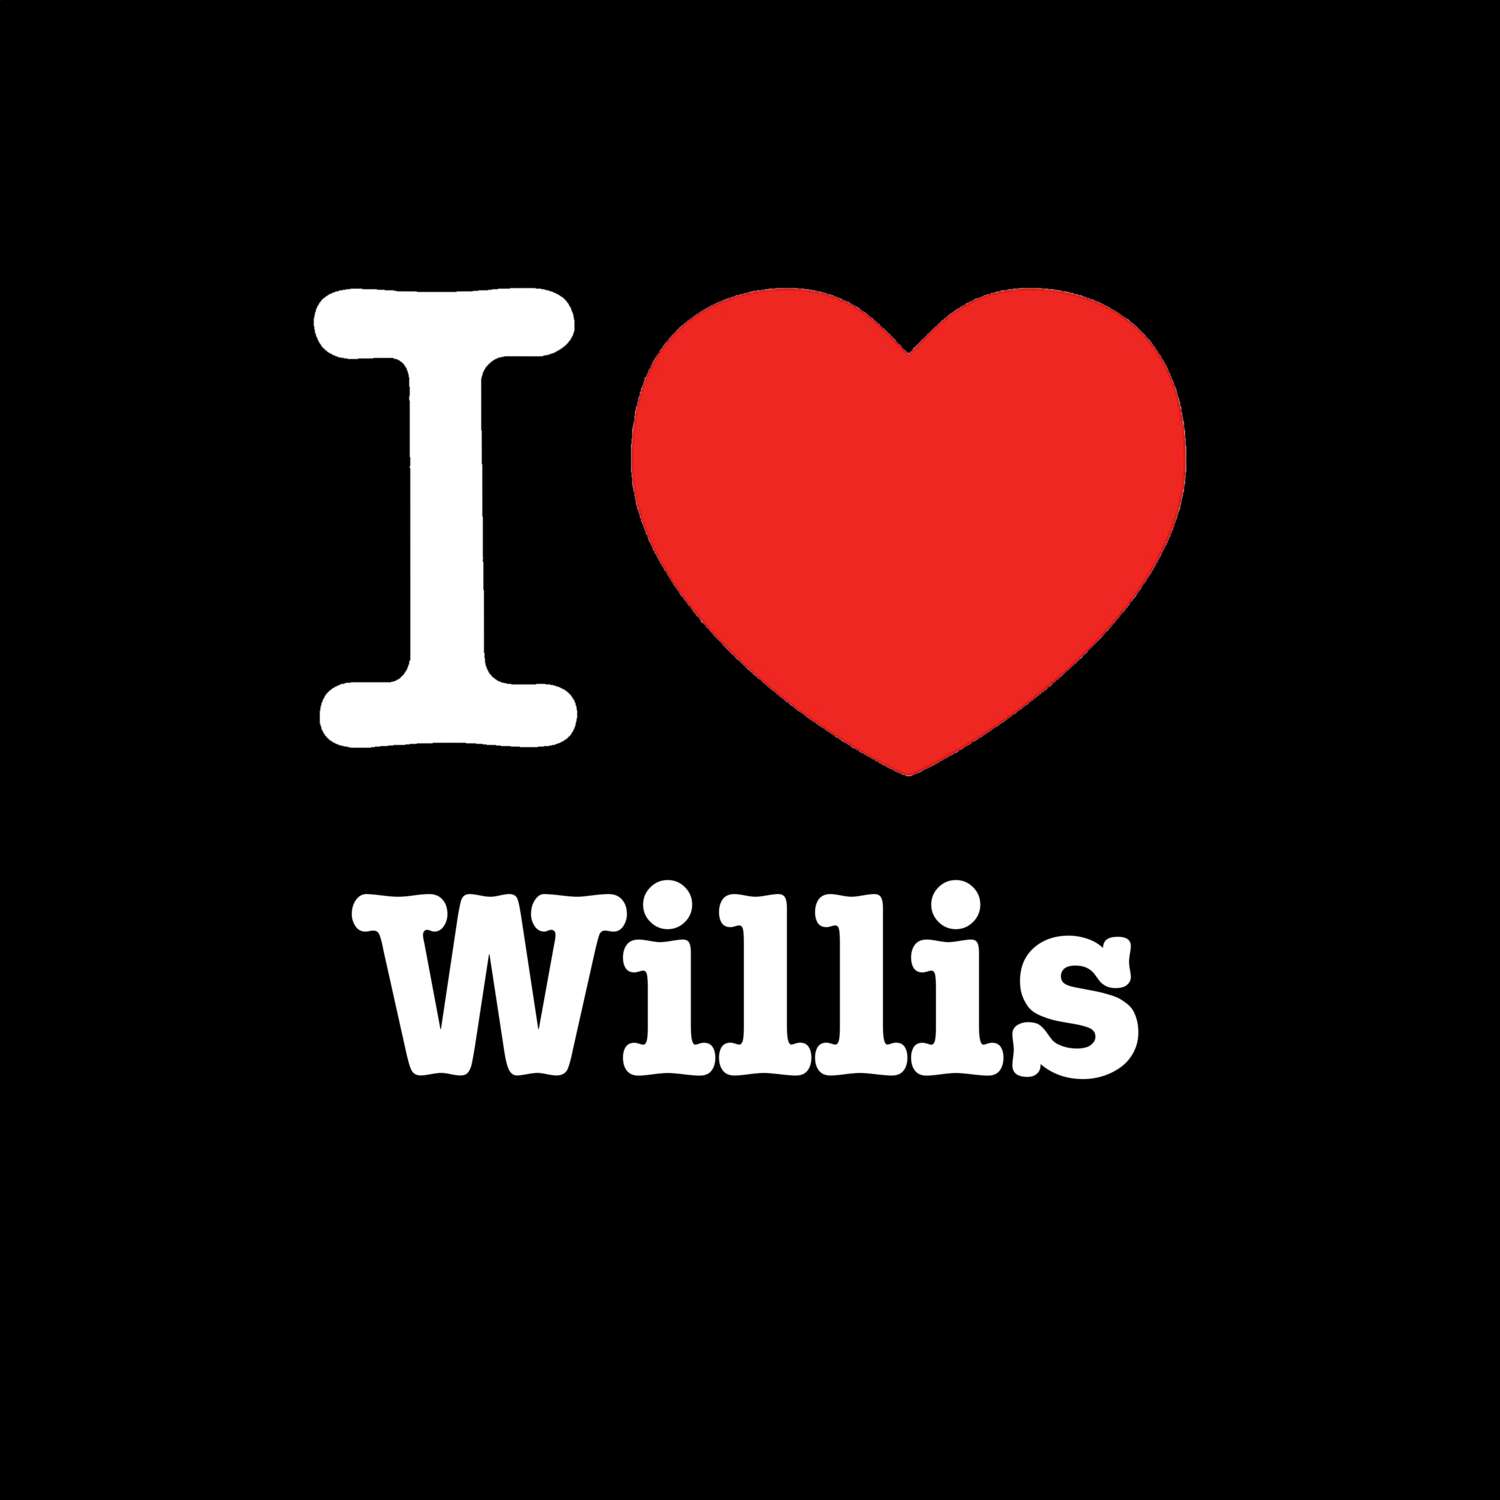 Willis T-Shirt »I love«